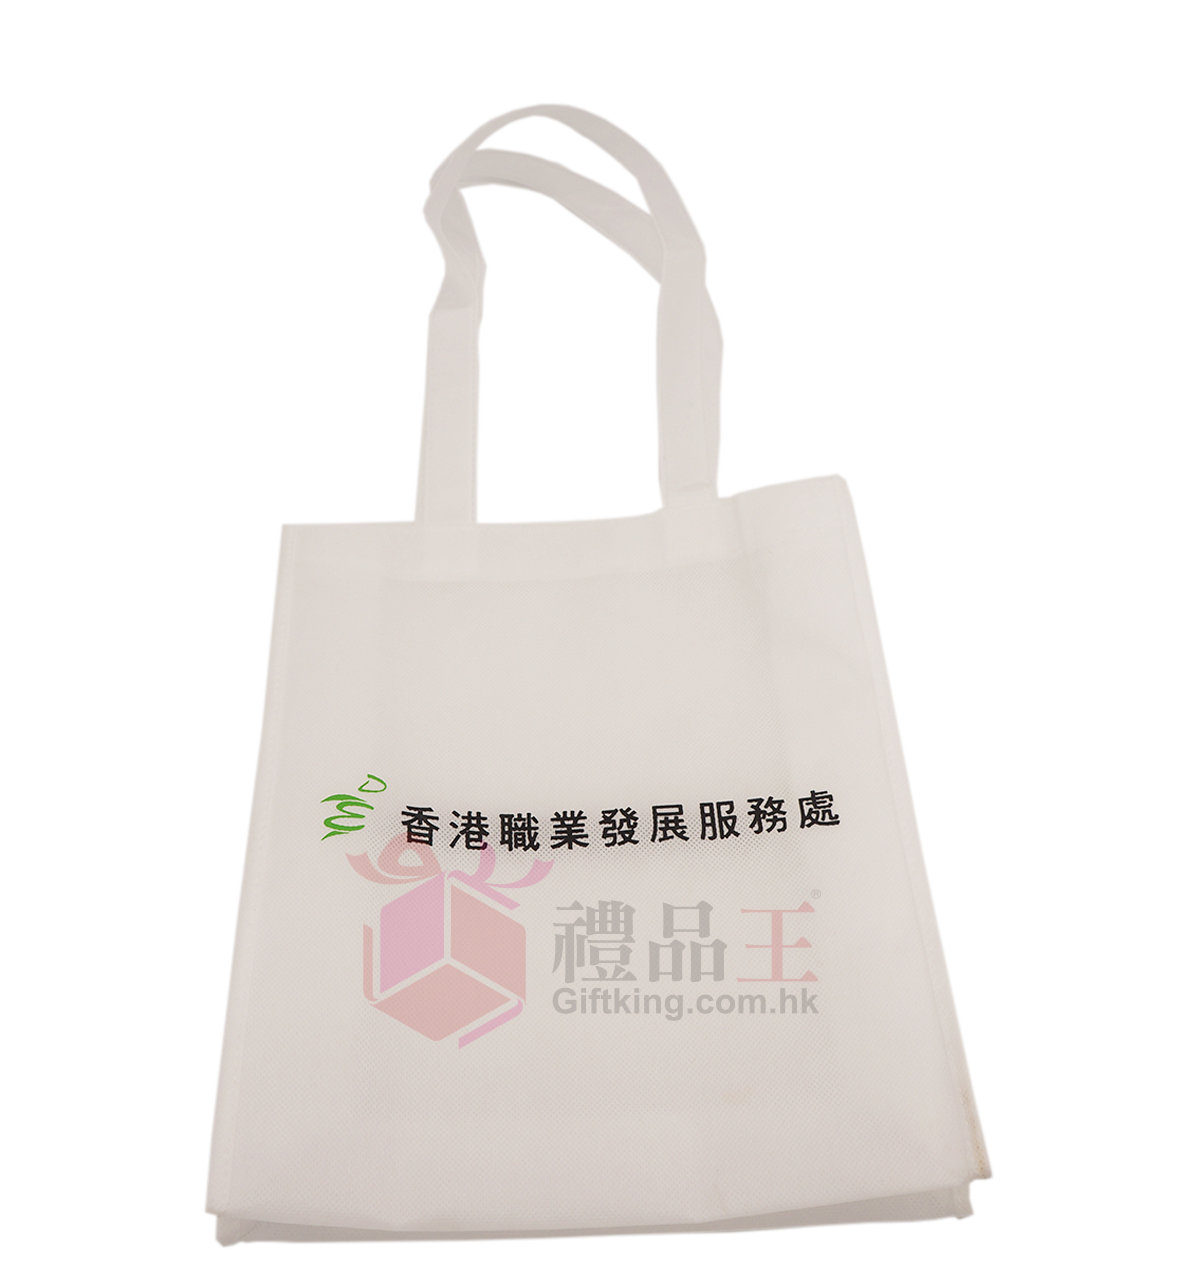 Hong Kong Employment Development Service Recycle Bag (Advertising Gift)